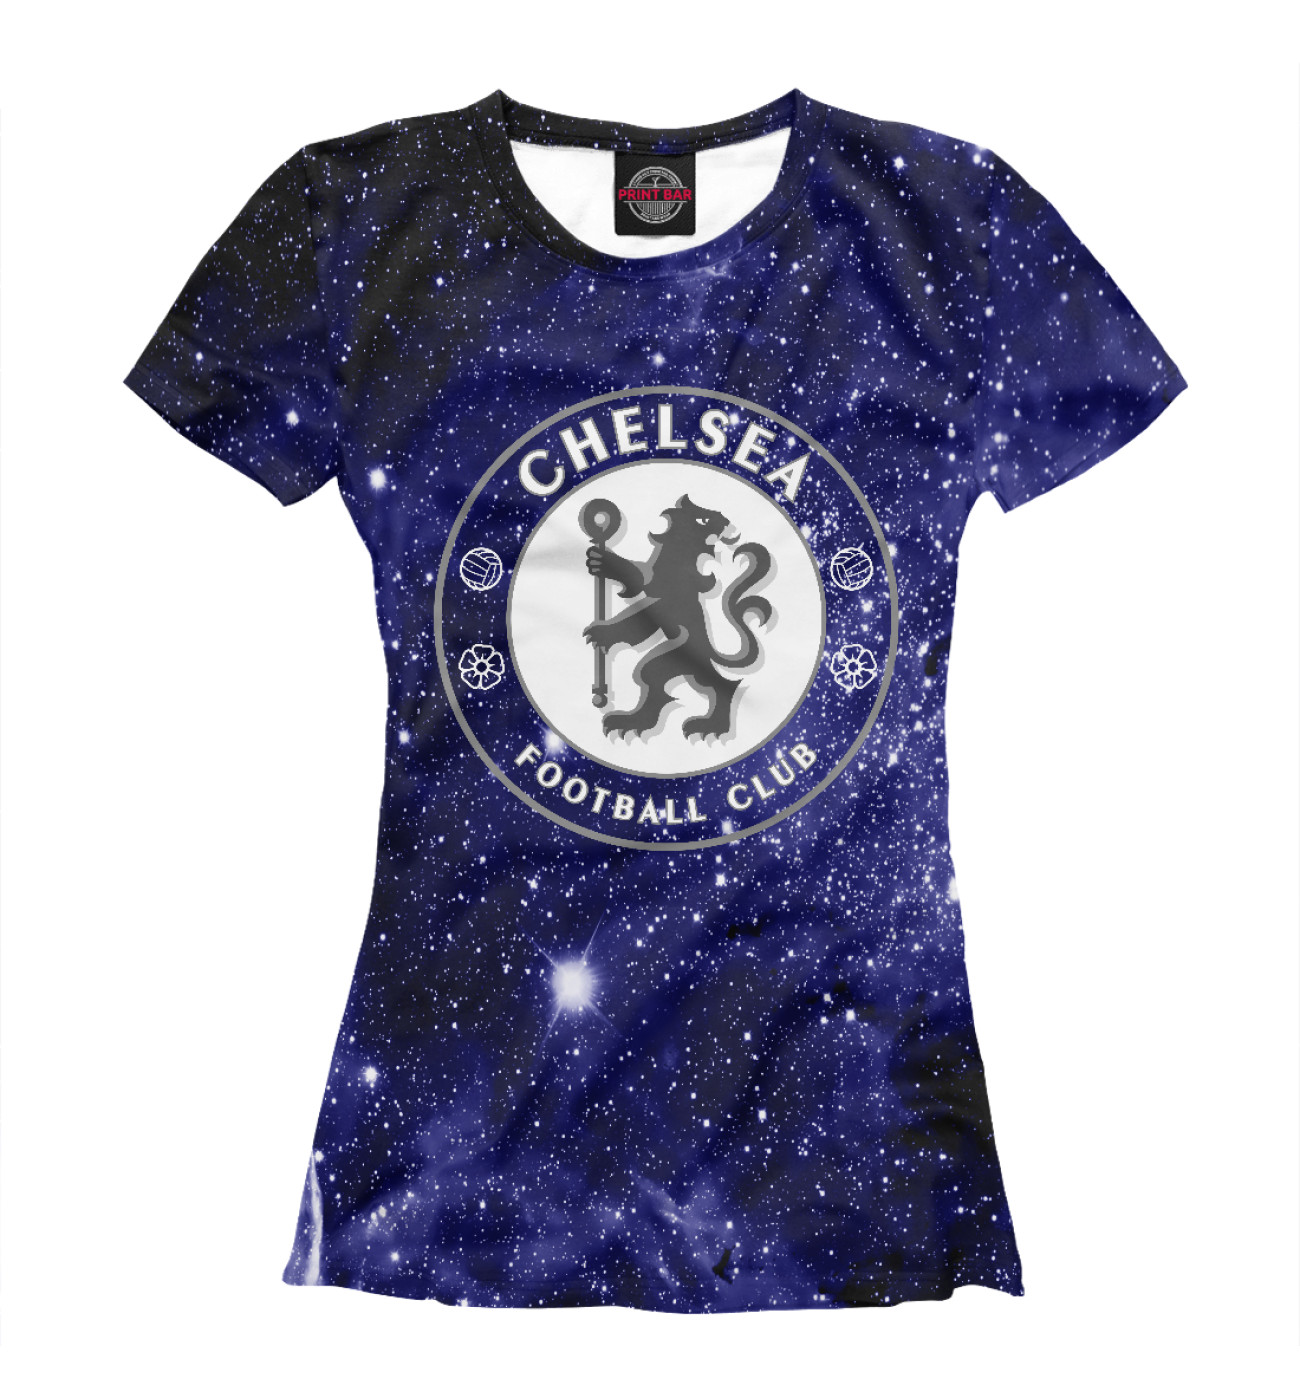 Женская Футболка Chelsea Cosmos, артикул: CHL-125611-fut-1